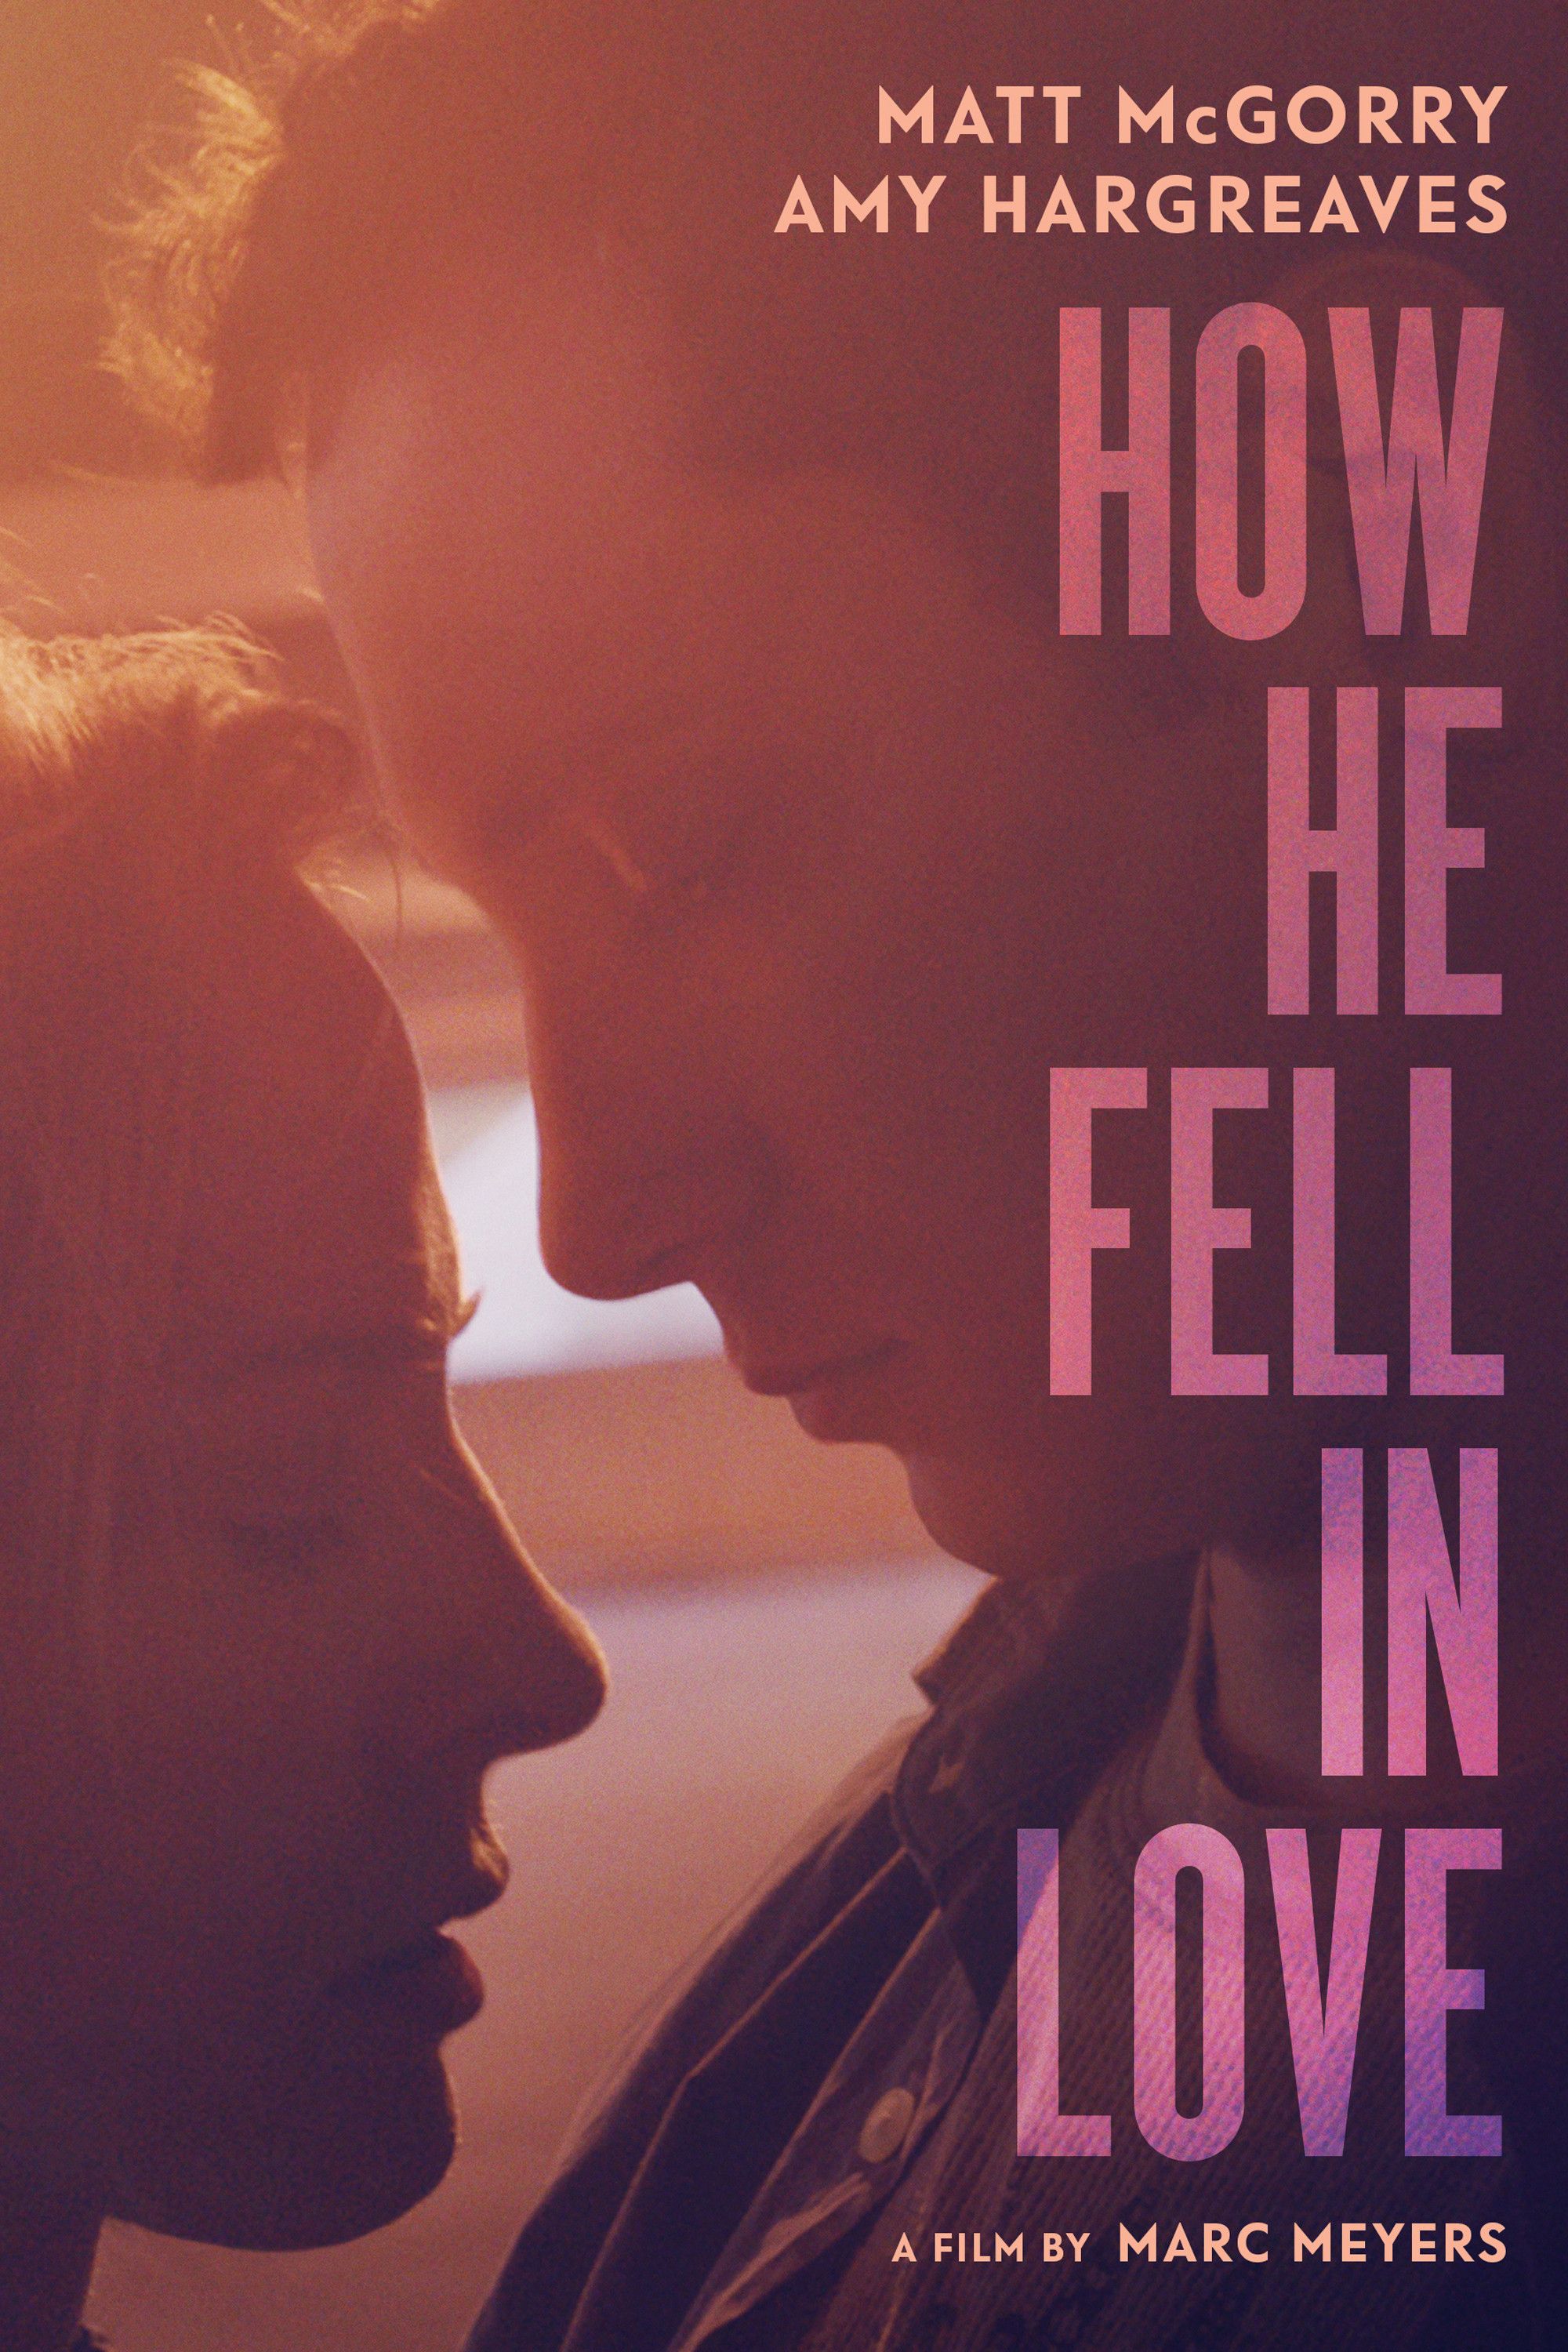 How he fell in love full movie online free